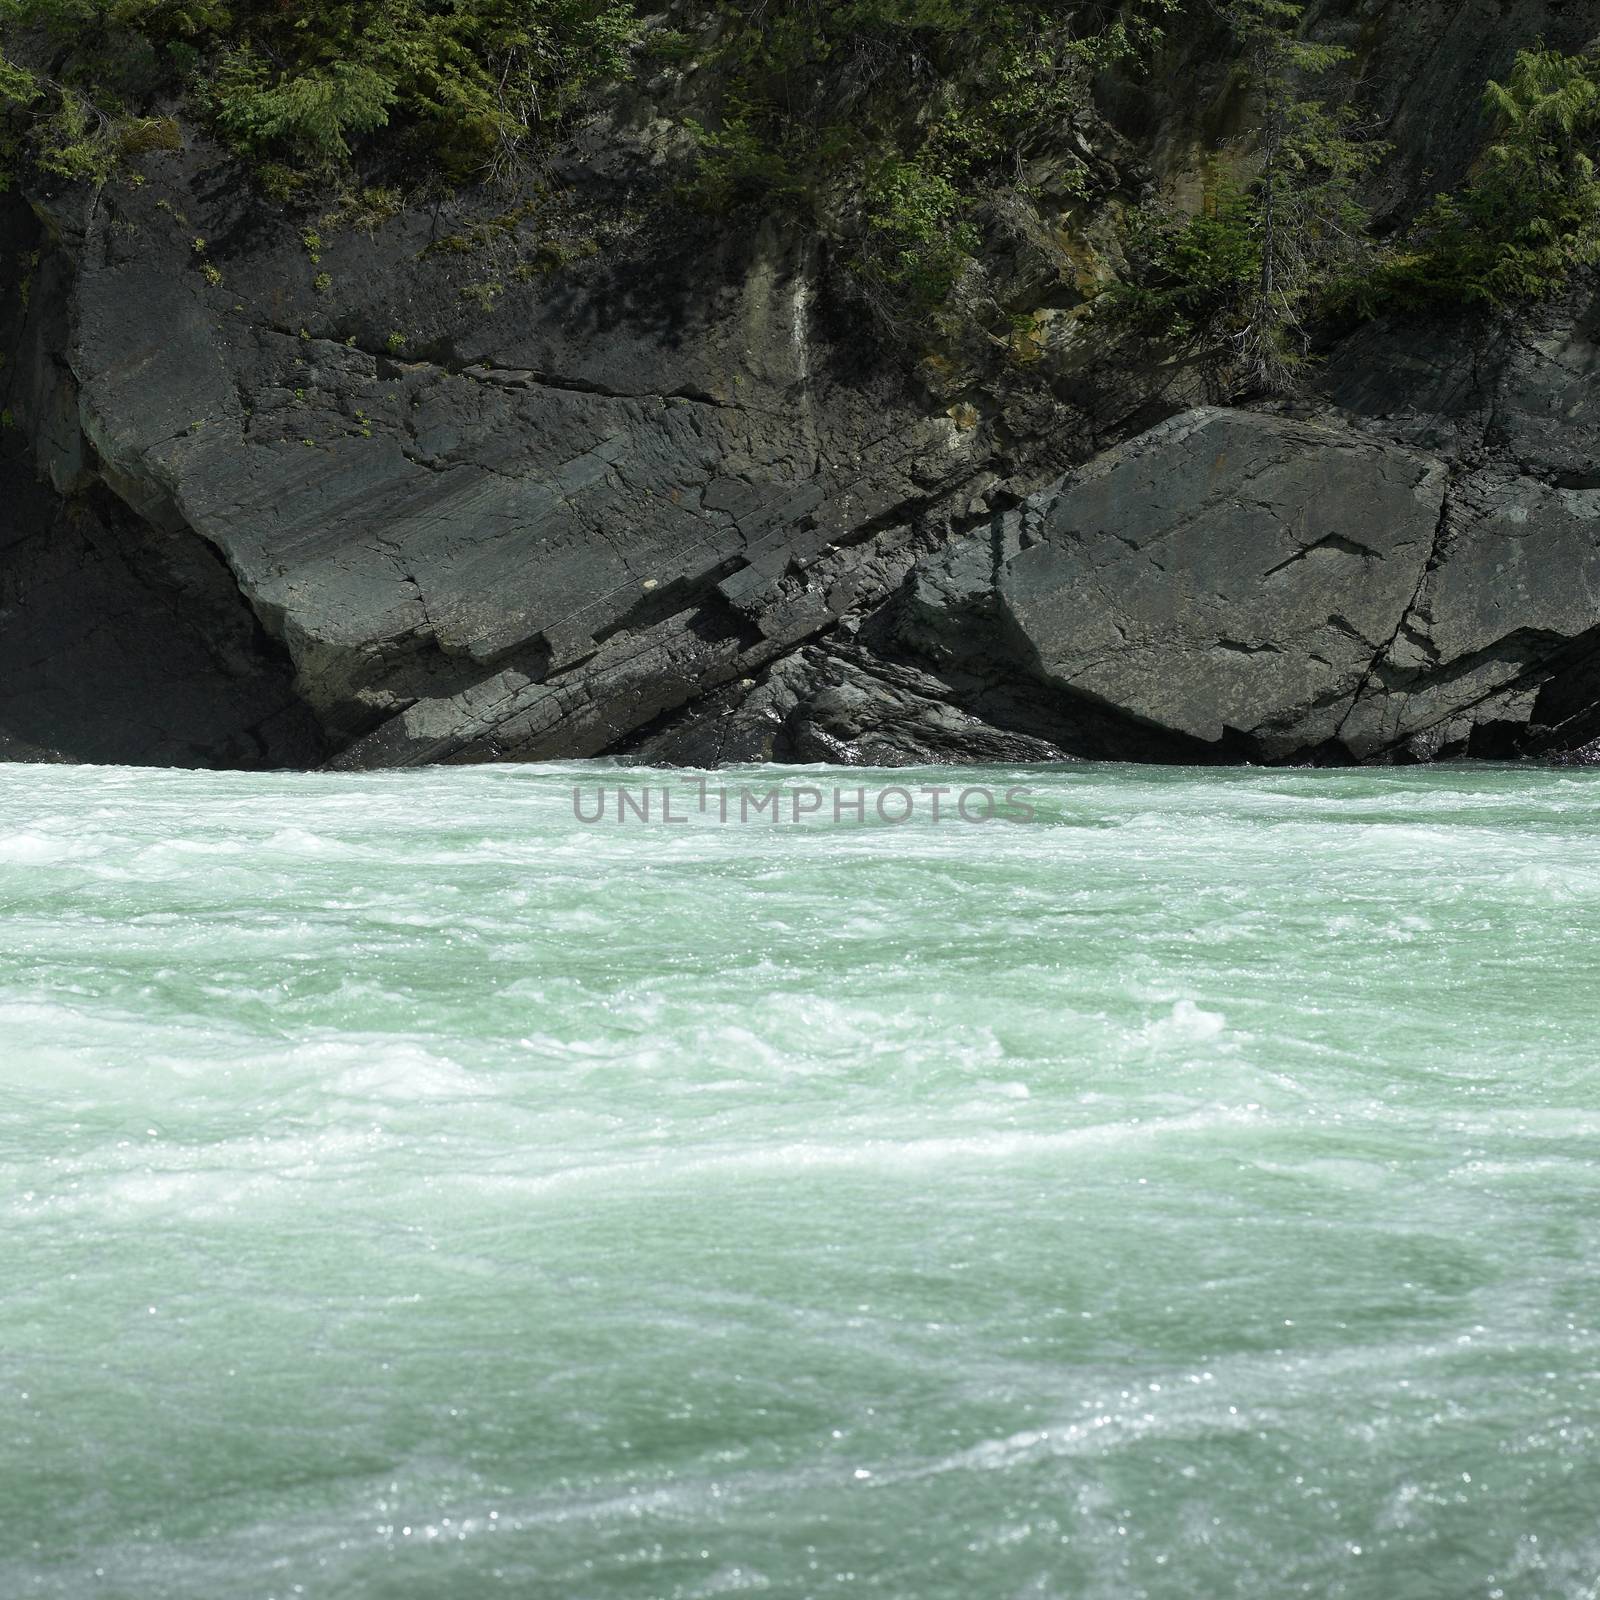 Green river water flowing near rocky edges